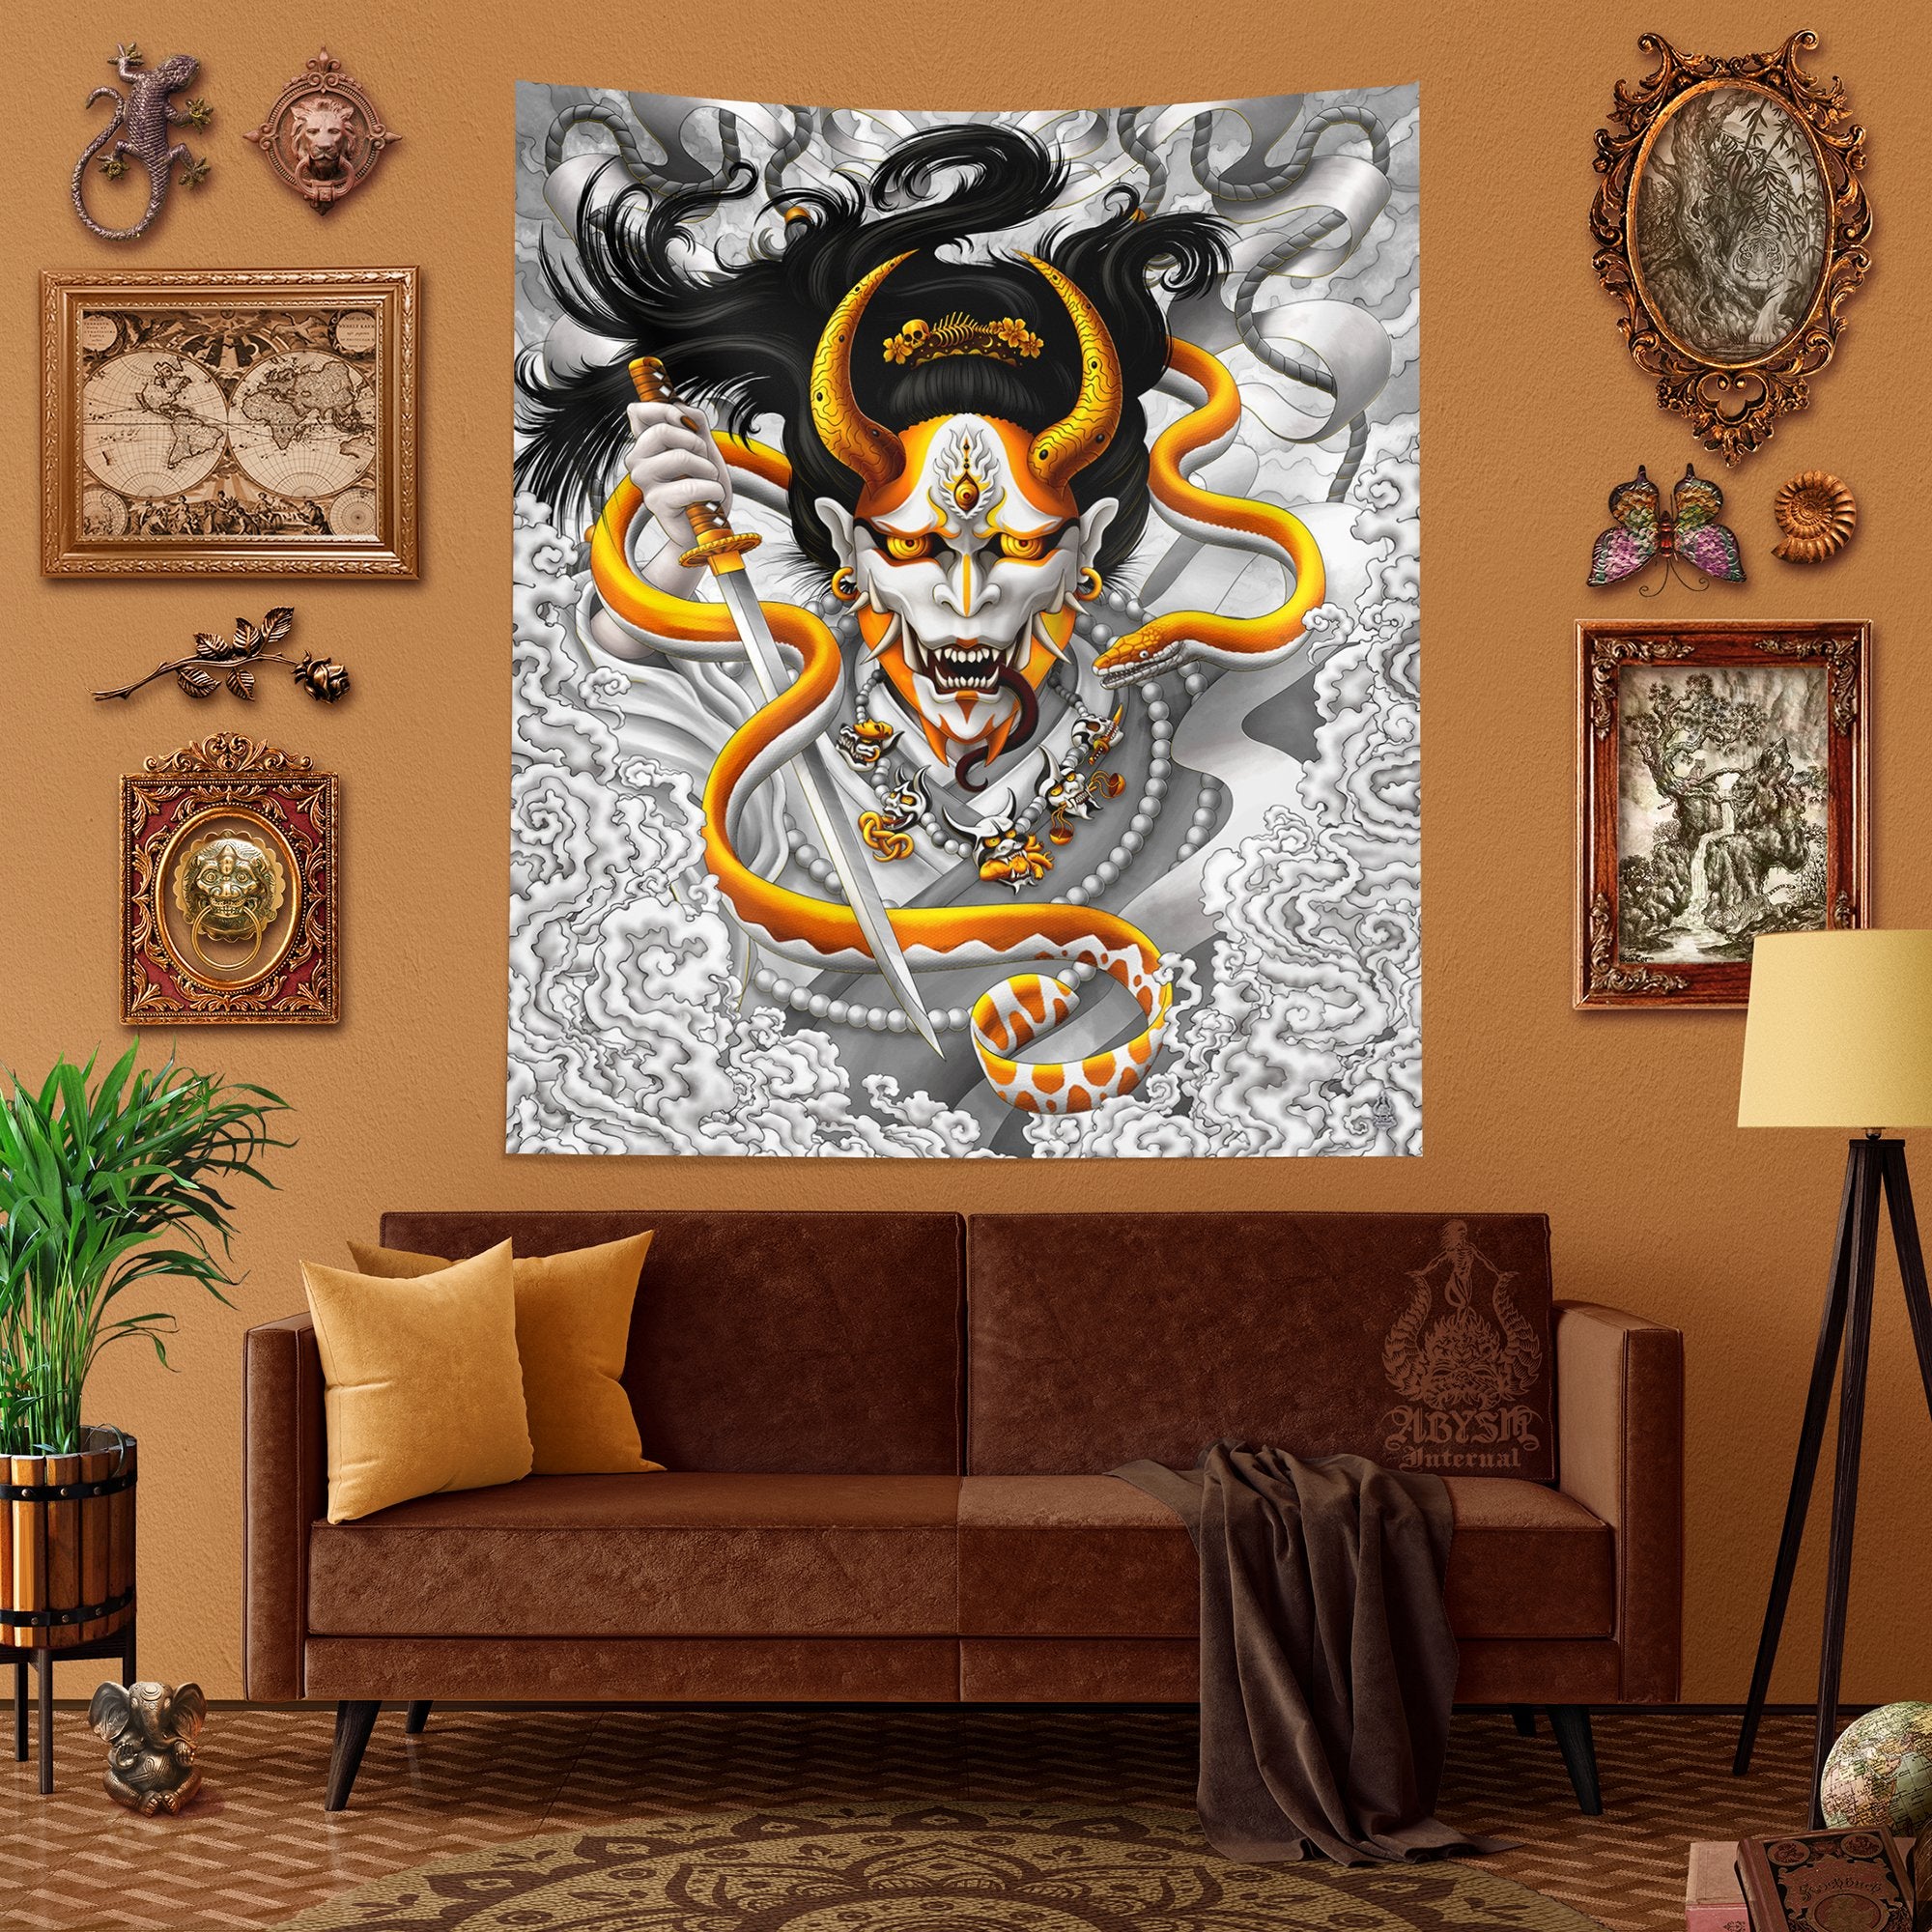 Hannya and Snake Tapestry, Japanese Demon Wall Hanging, Anime, Manga and Gamer Room Decor, Vertical Art Print - White Gold - Abysm Internal